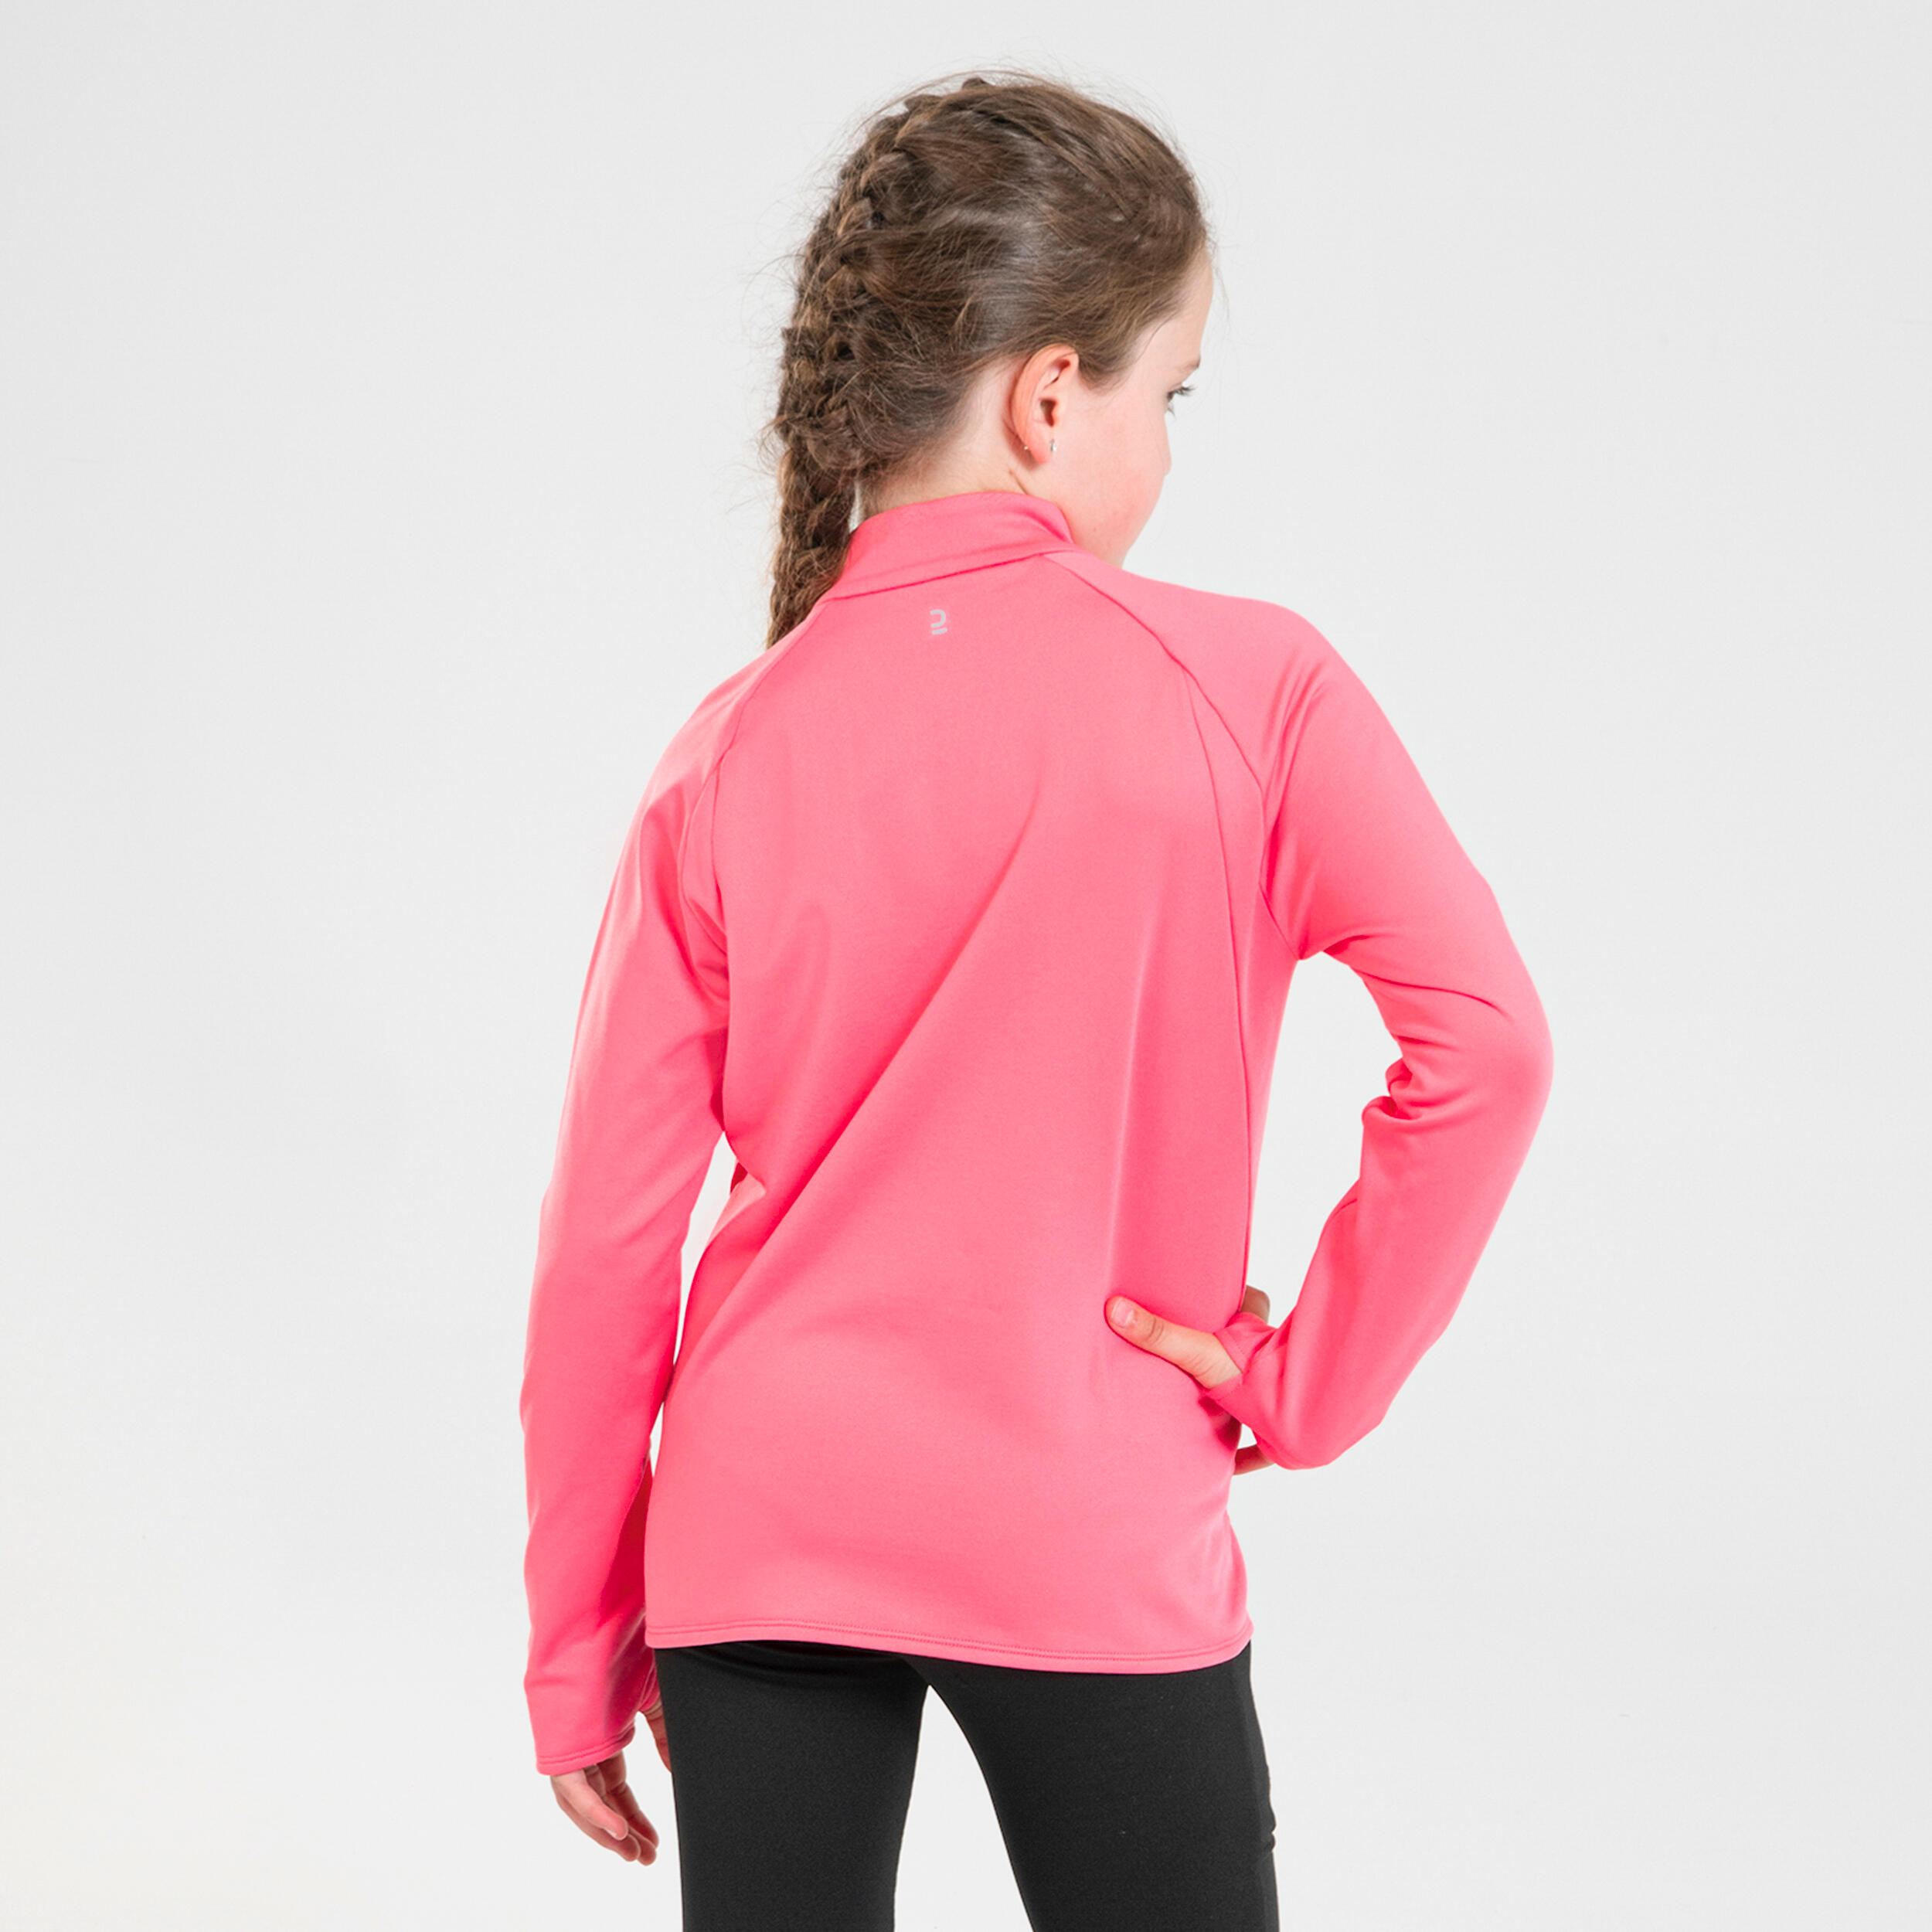 Kids' KIPRUN WARM Warm+ 1/2 zip long-sleeved jersey - Pink 3/10